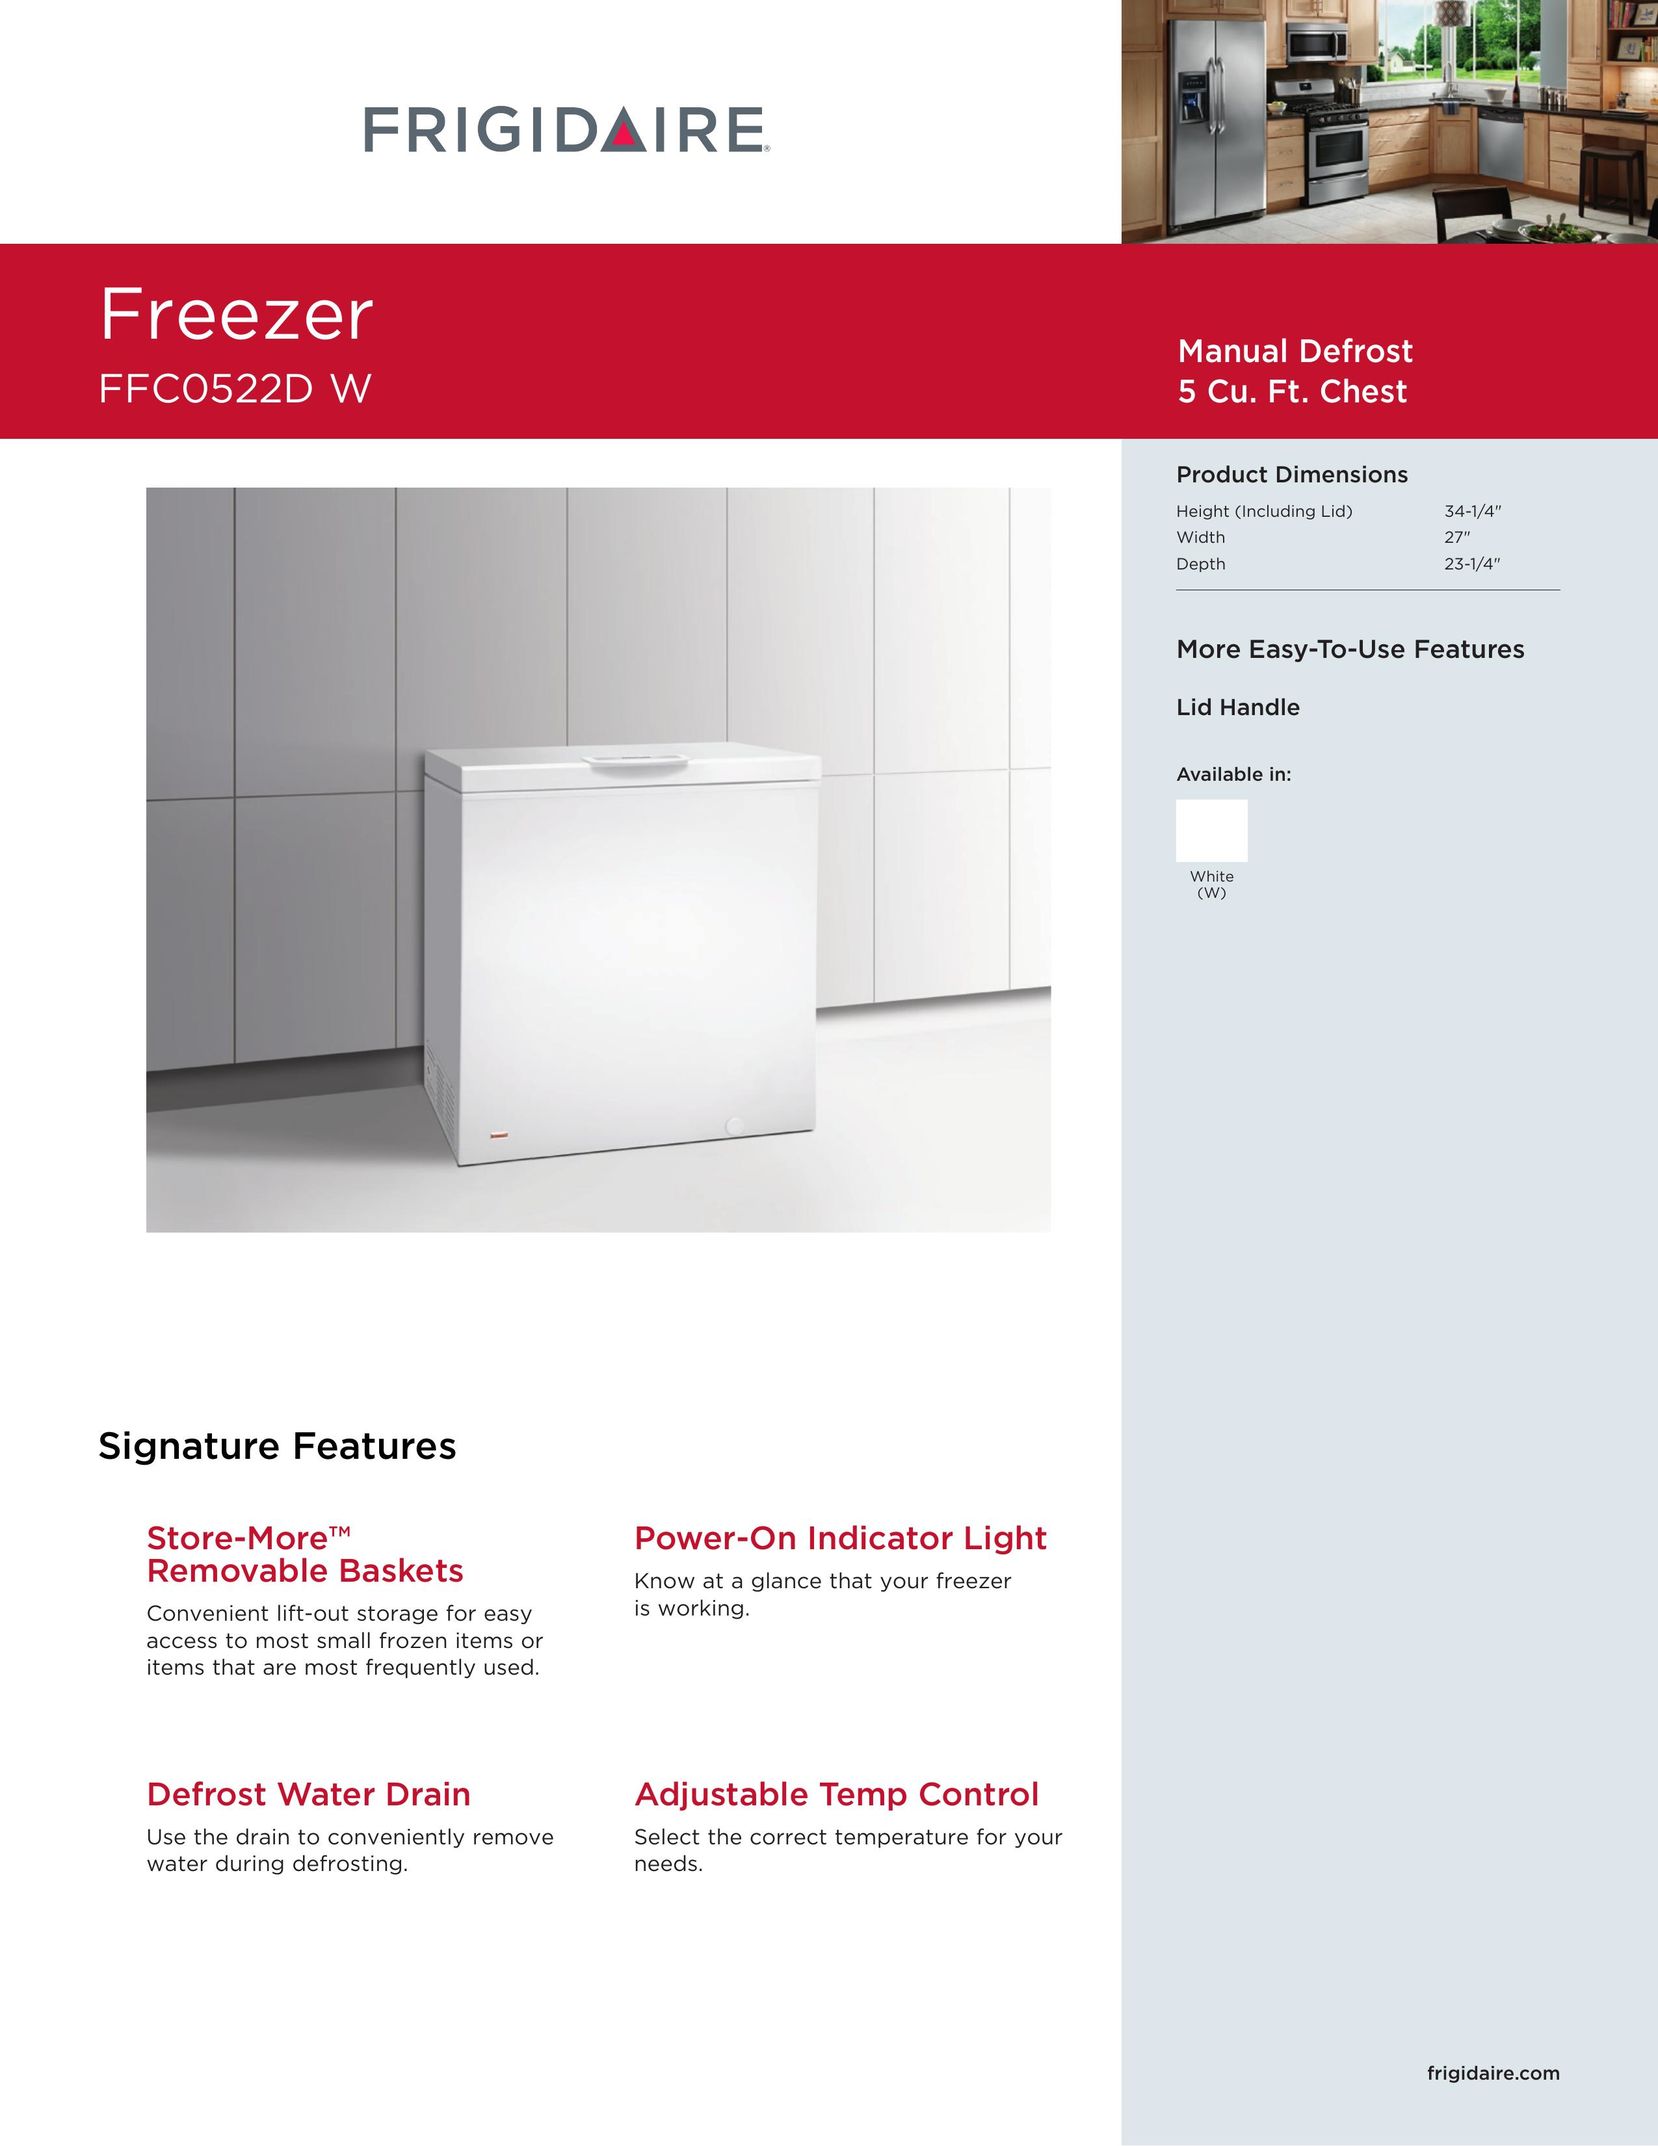 Frigidaire FFC0522D W Freezer User Manual